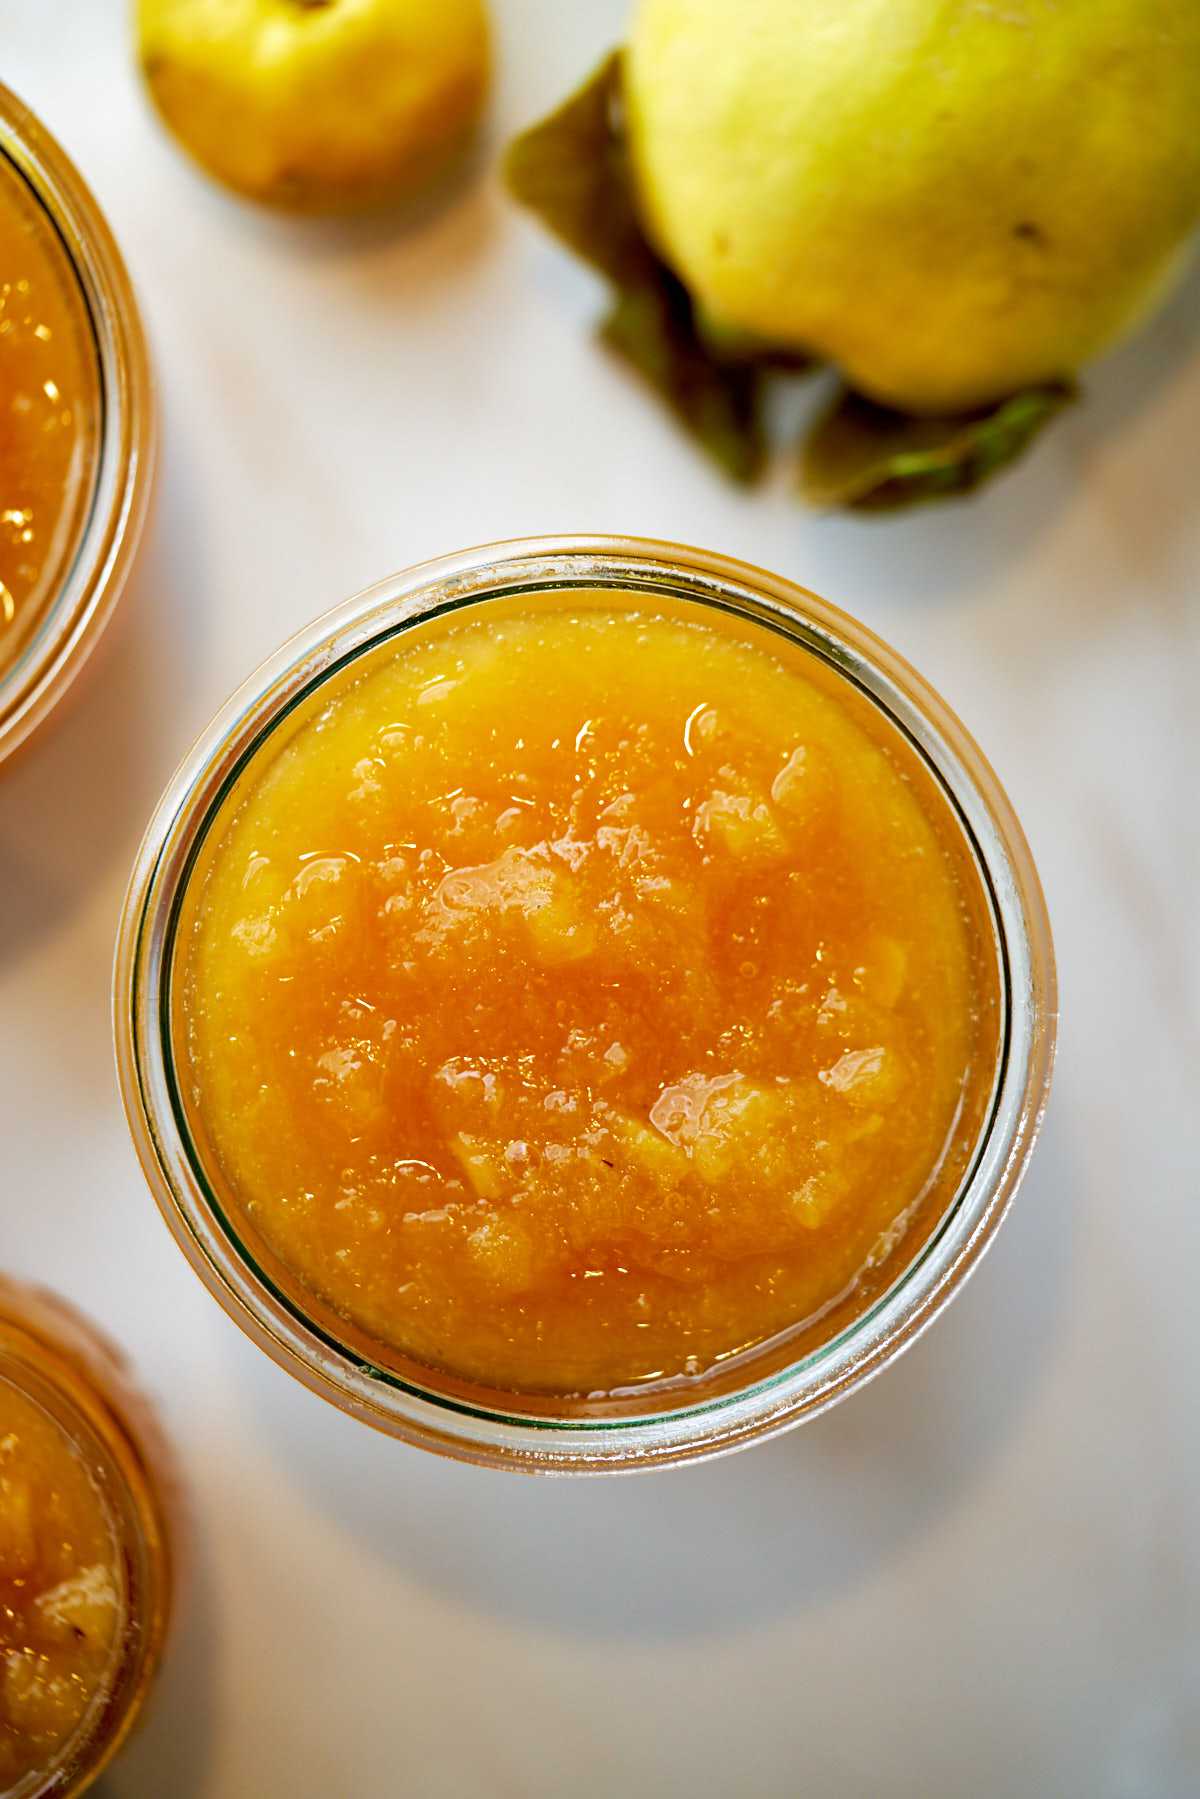 Top view of golden orange jam in a glass jar.